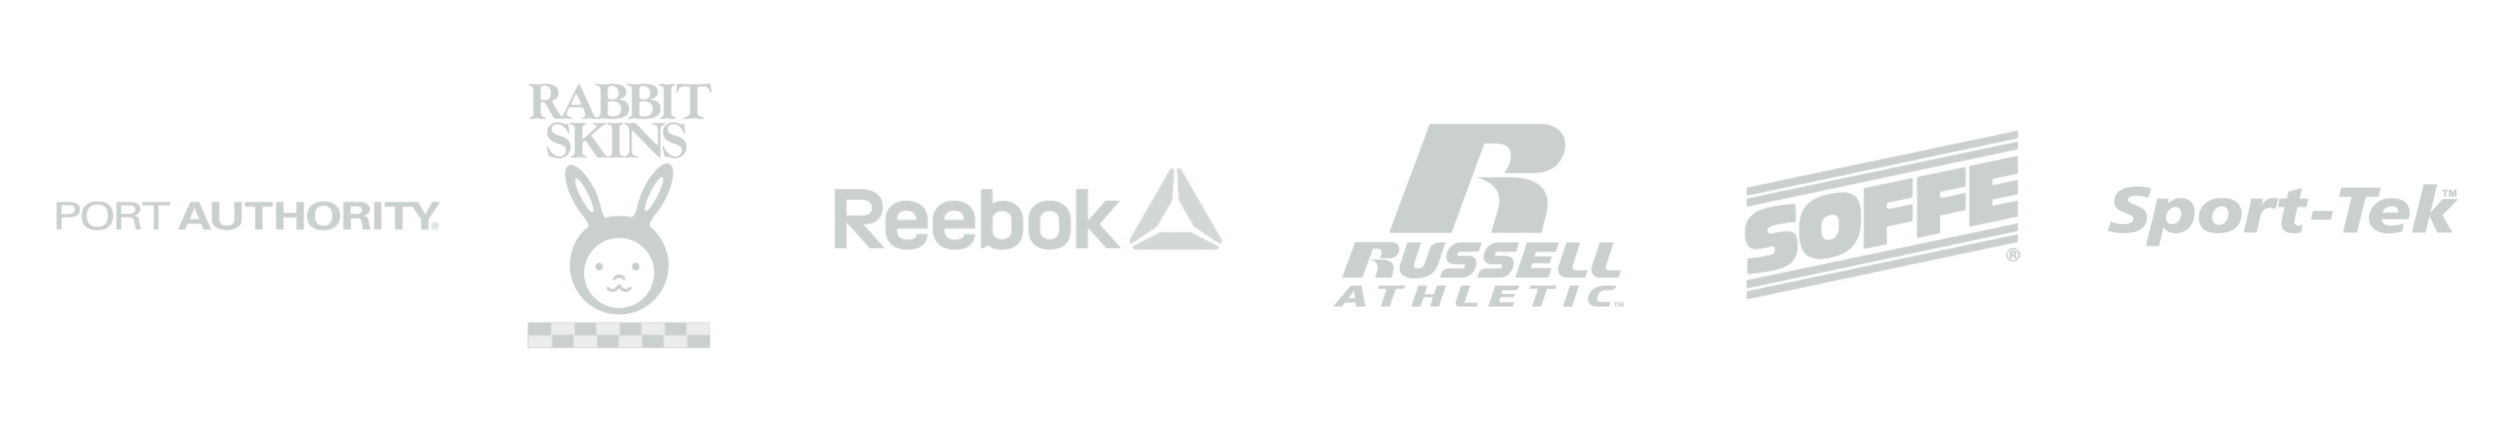 KYC_PortAuthority-RabbitSkins-Reebok-RussellAthletic-Soffe-SportTek.png